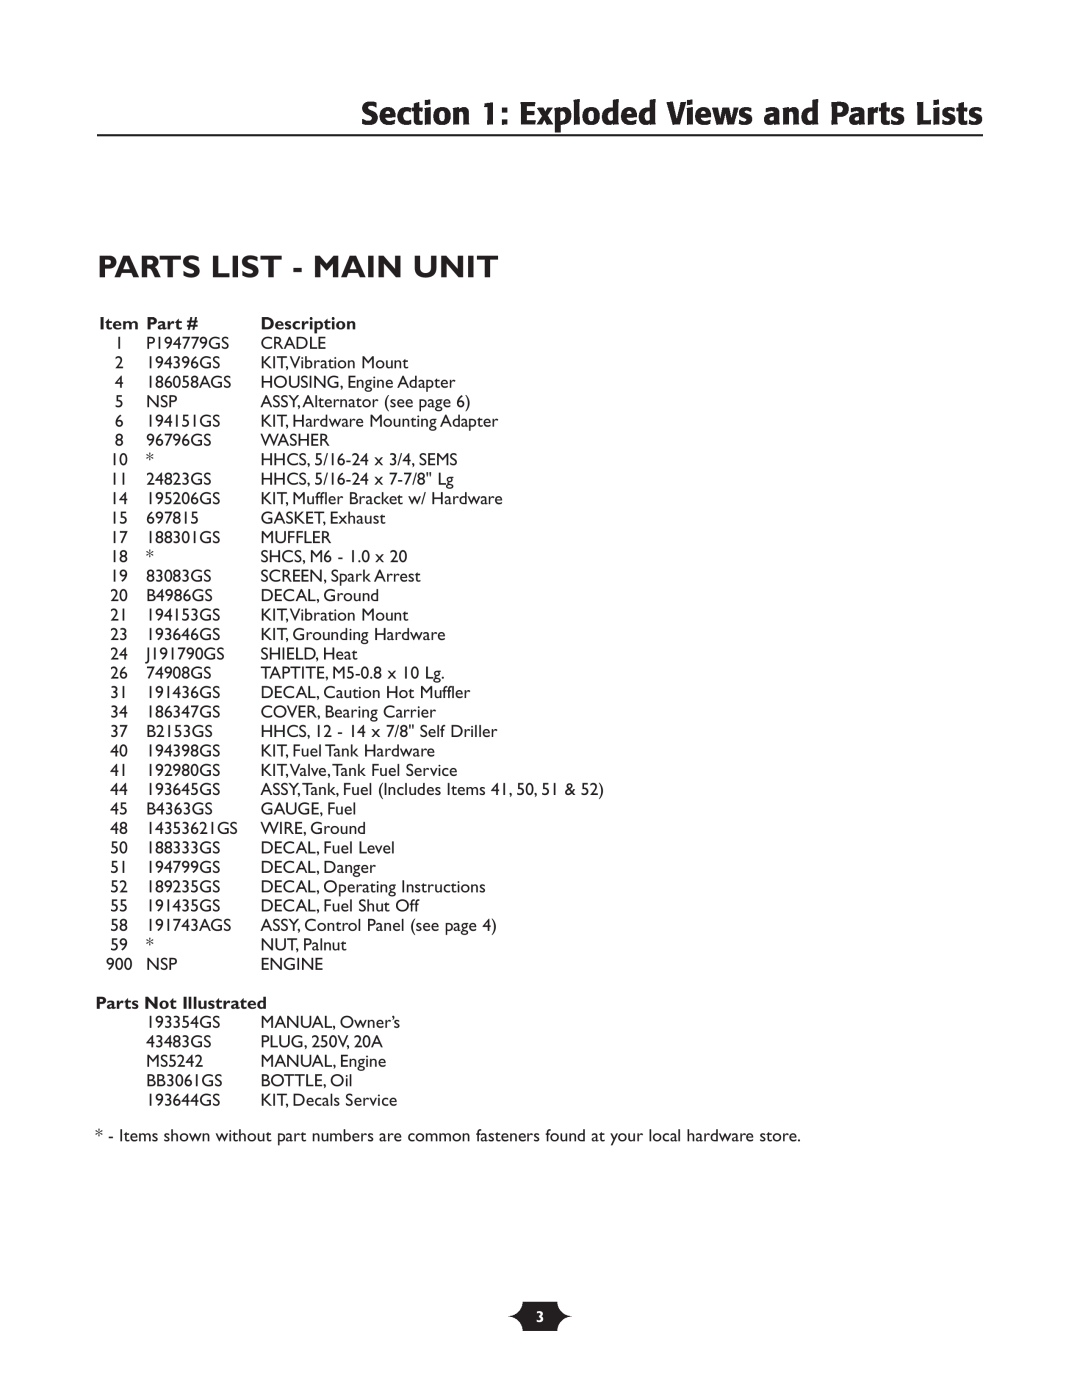 Troy-Bilt 1924 manual Exploded Views and Parts Lists, Parts List - Main Unit, Description, Parts Not Illustrated 